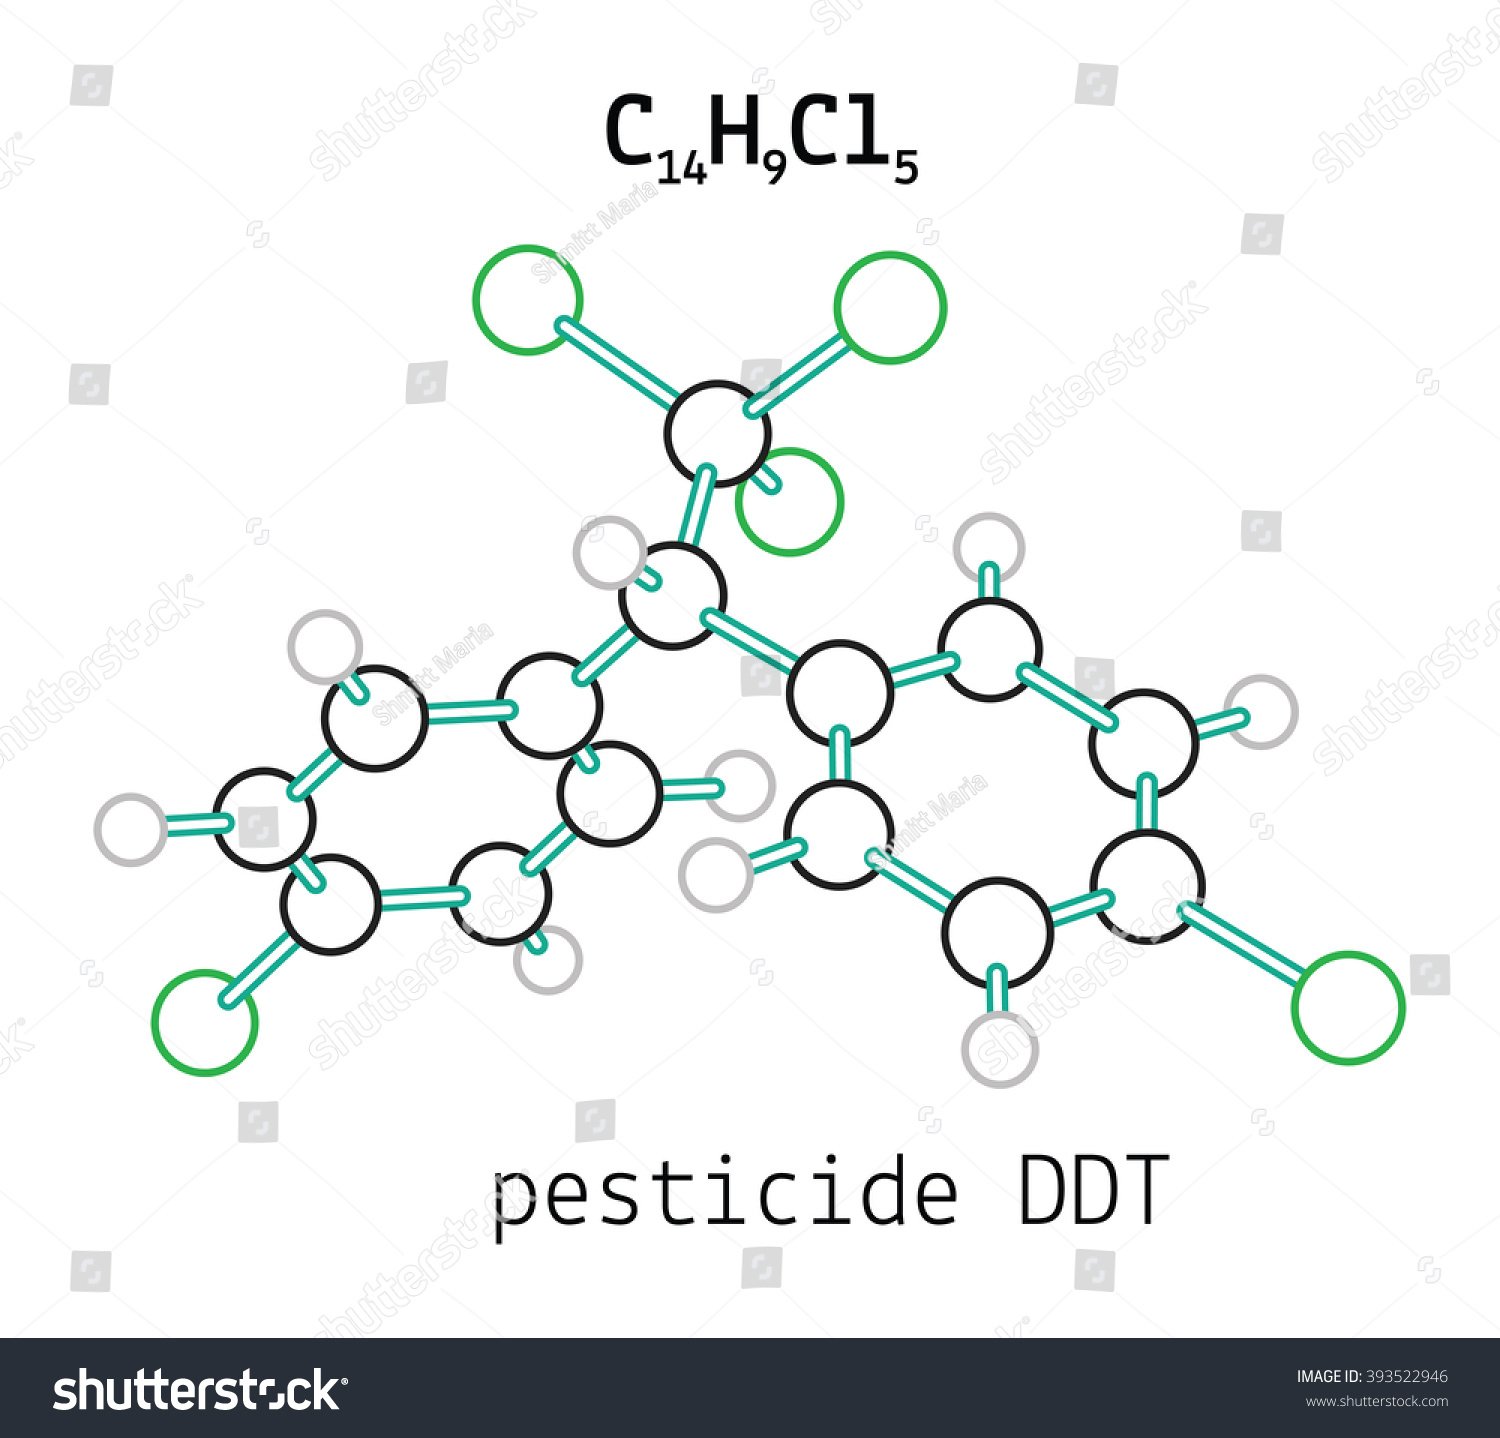 SVG of C14H9Cl5 pesticide DDT molecule svg